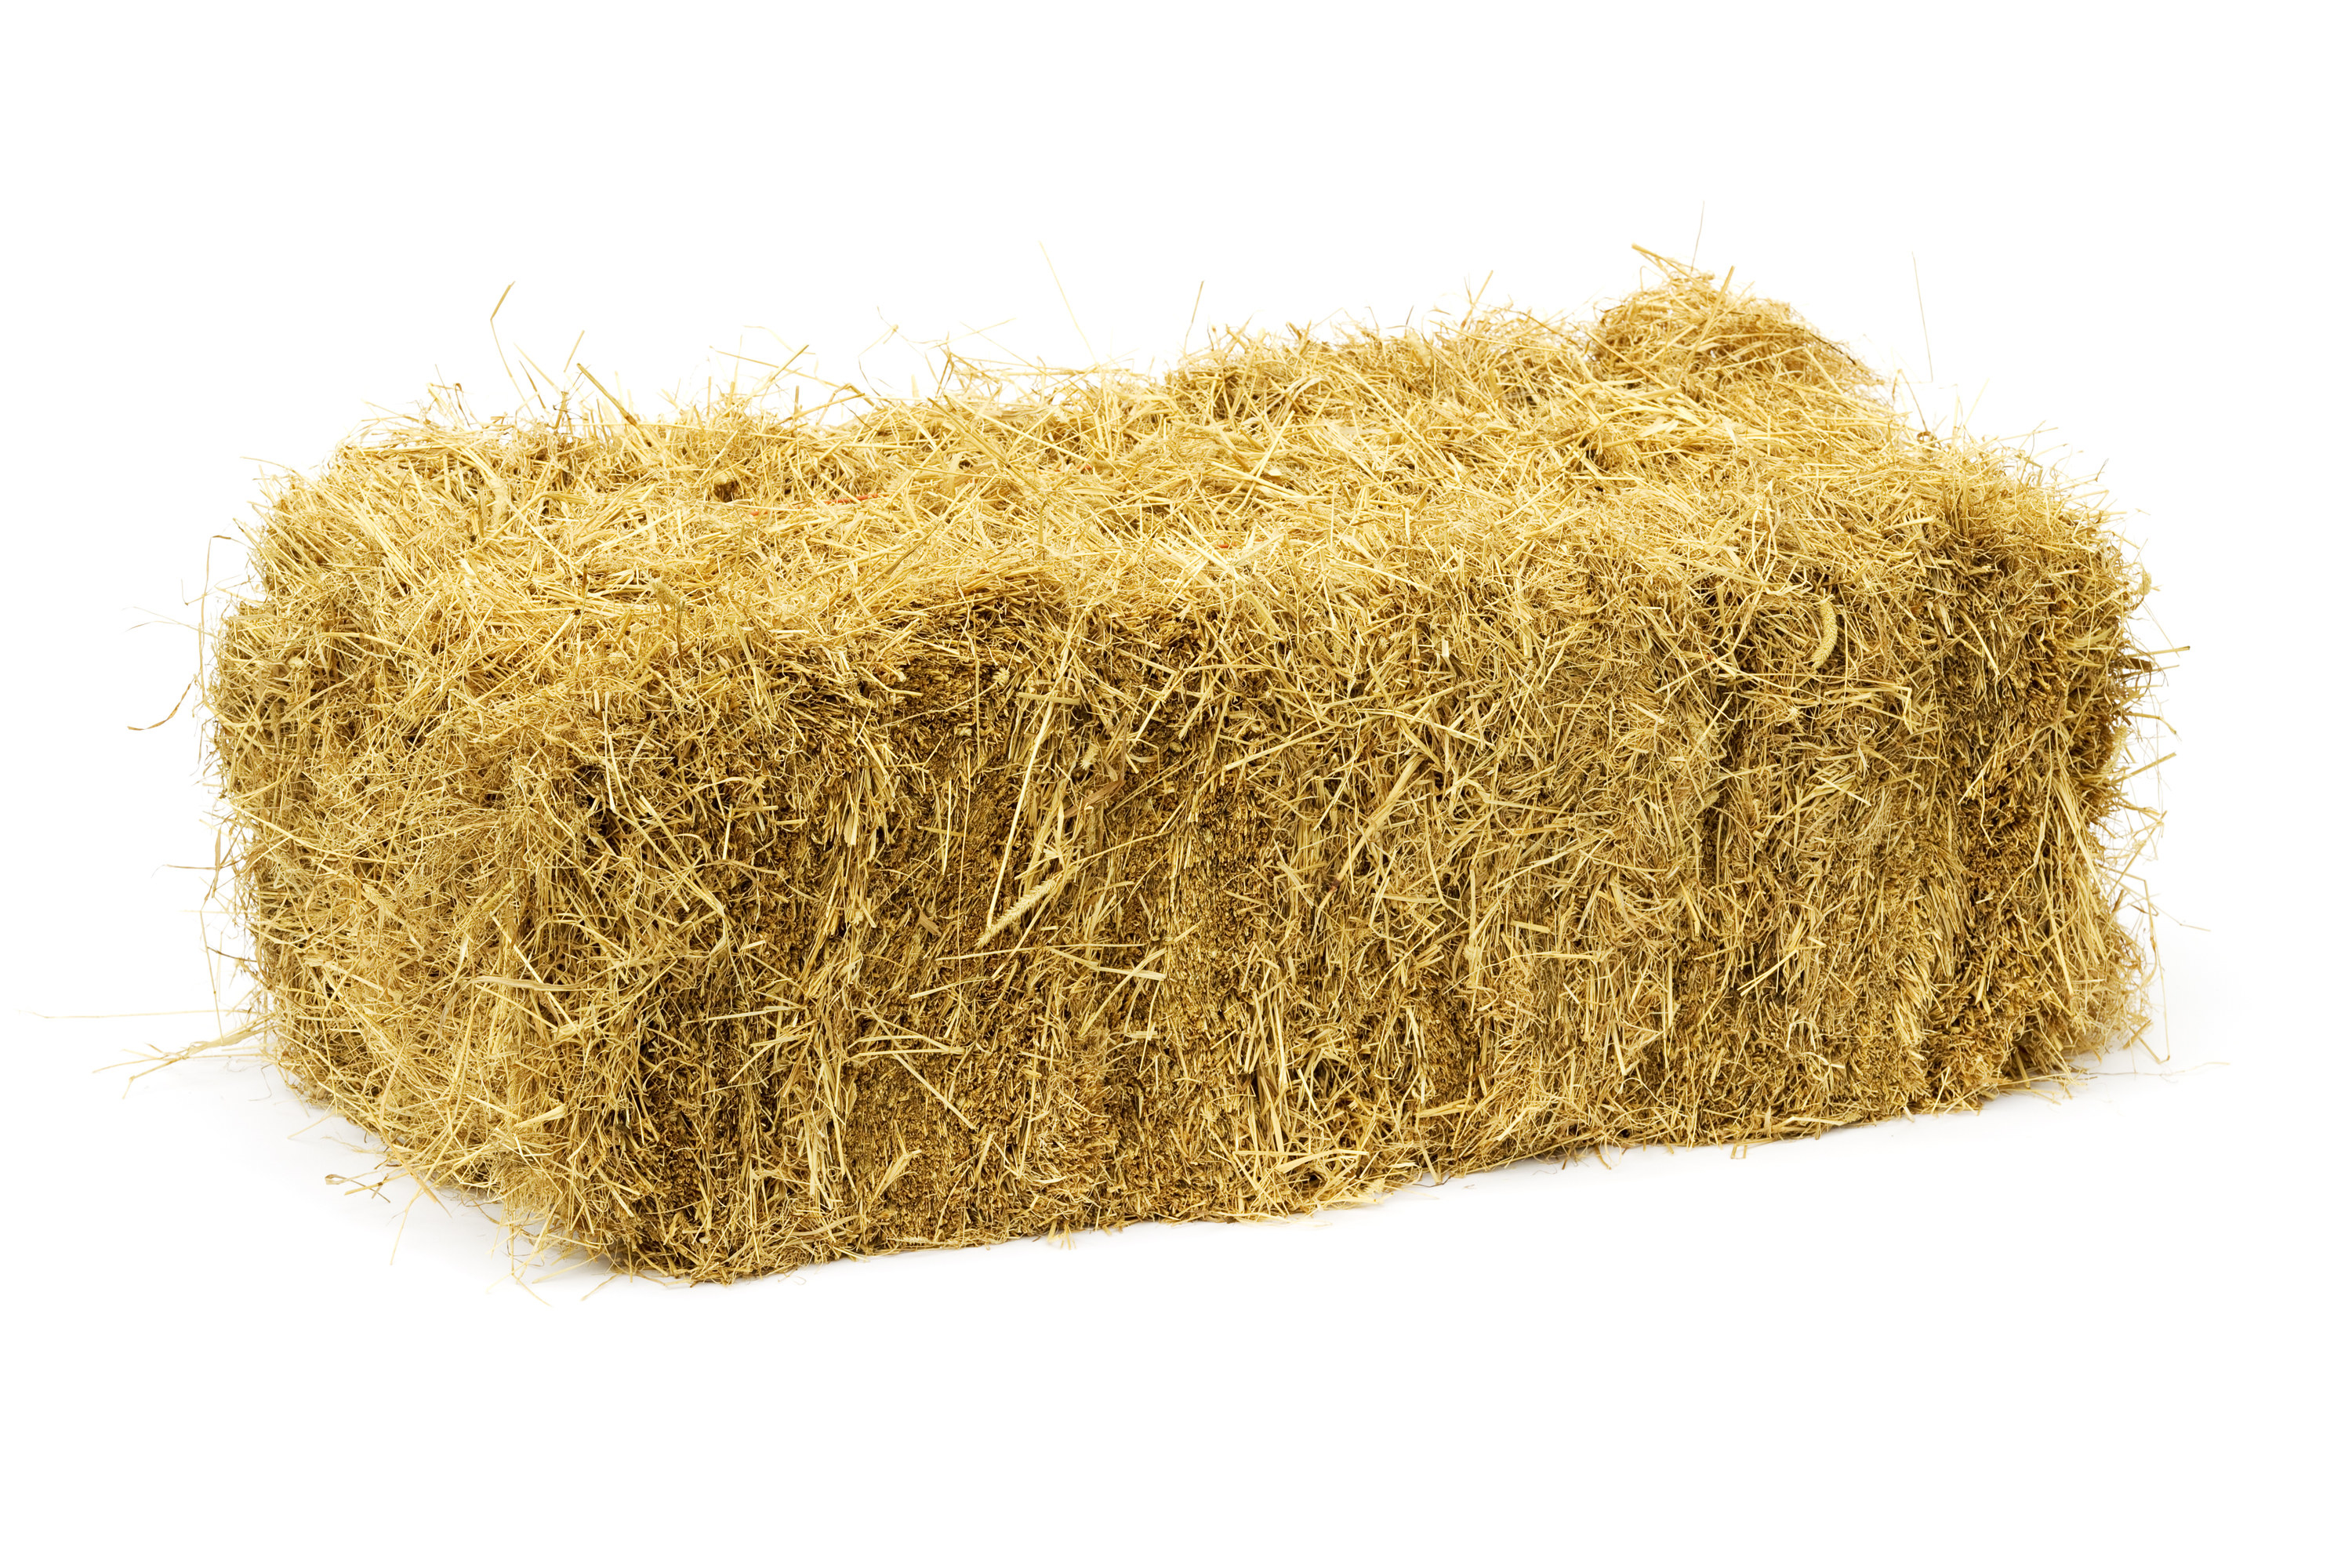 A rectangular bale of hay